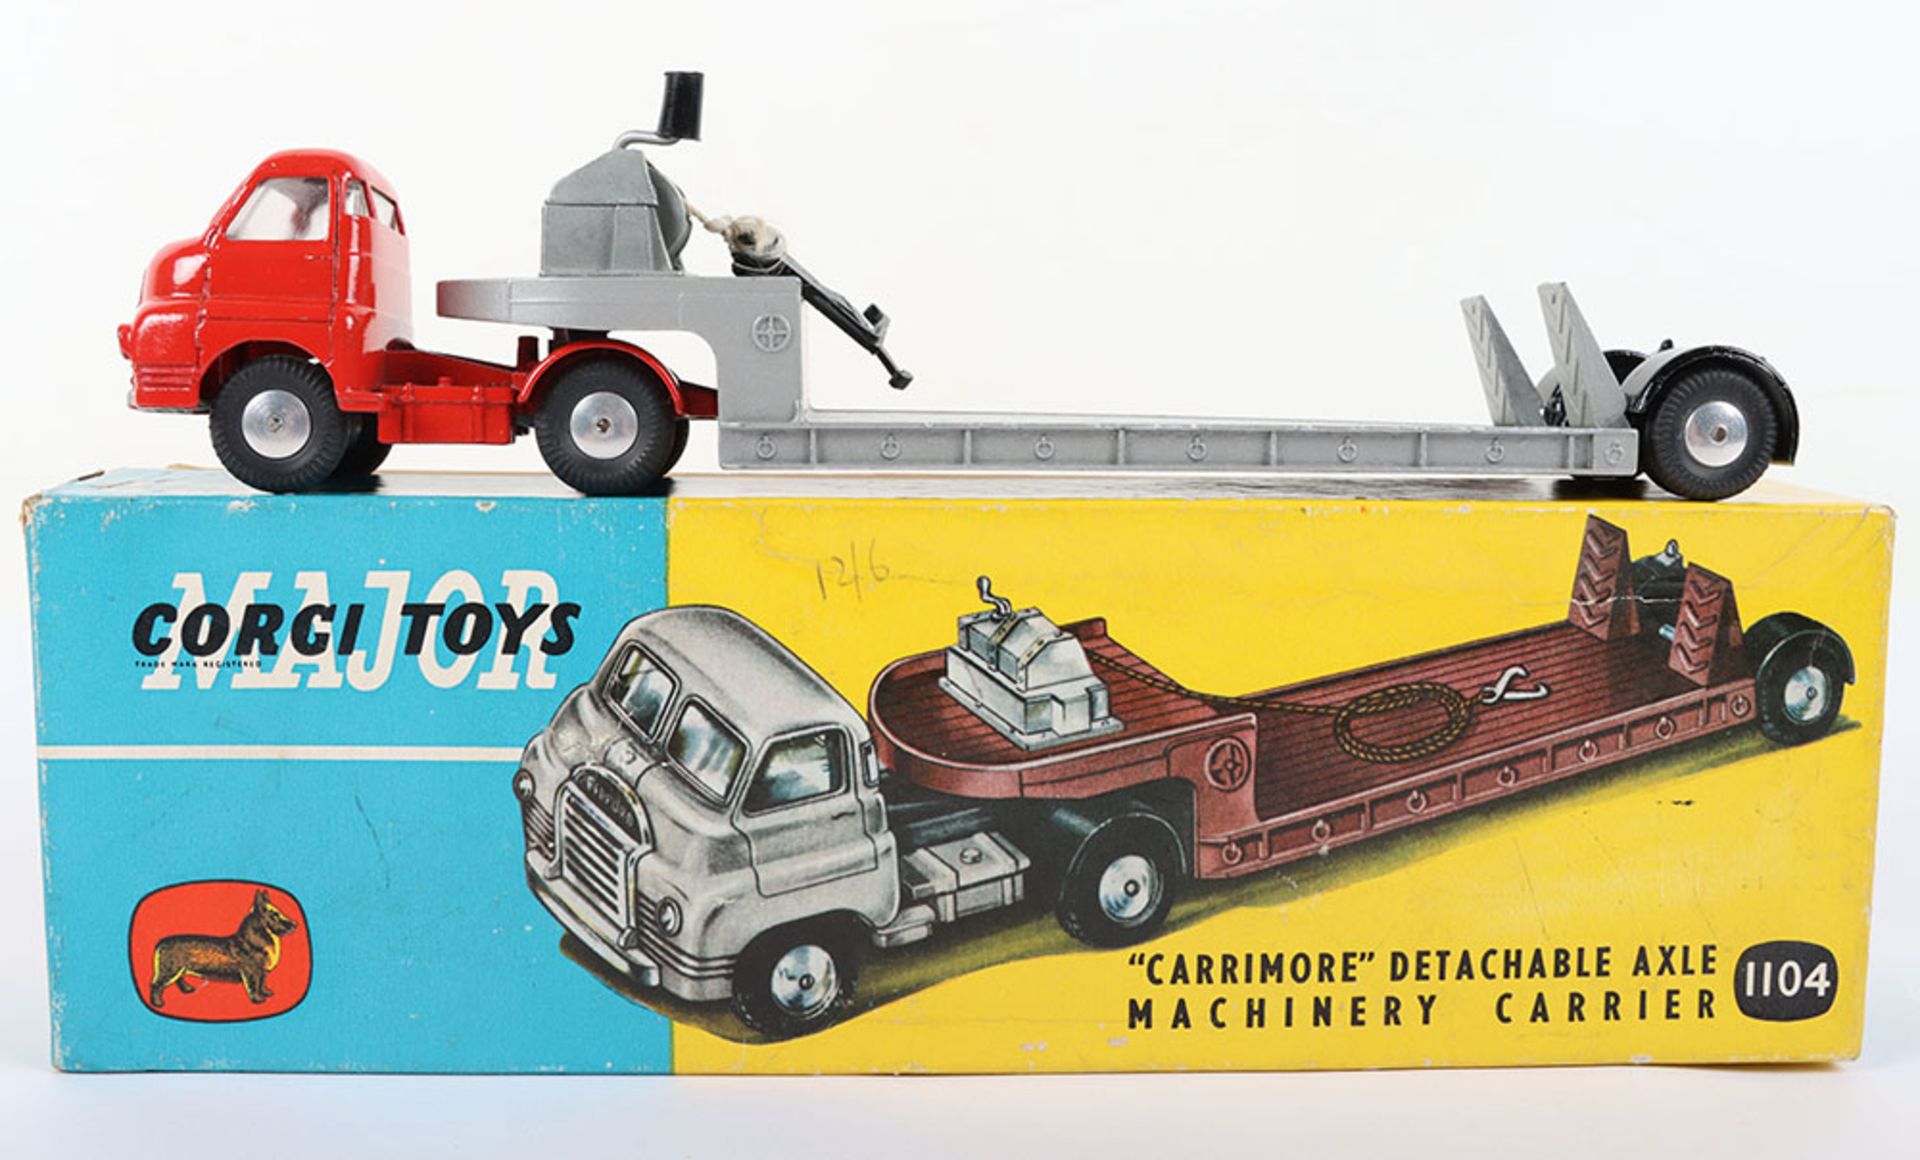 Corgi Major Toys 1104 Bedford S “Carrimore” Detachable Axle Machinery Carrier